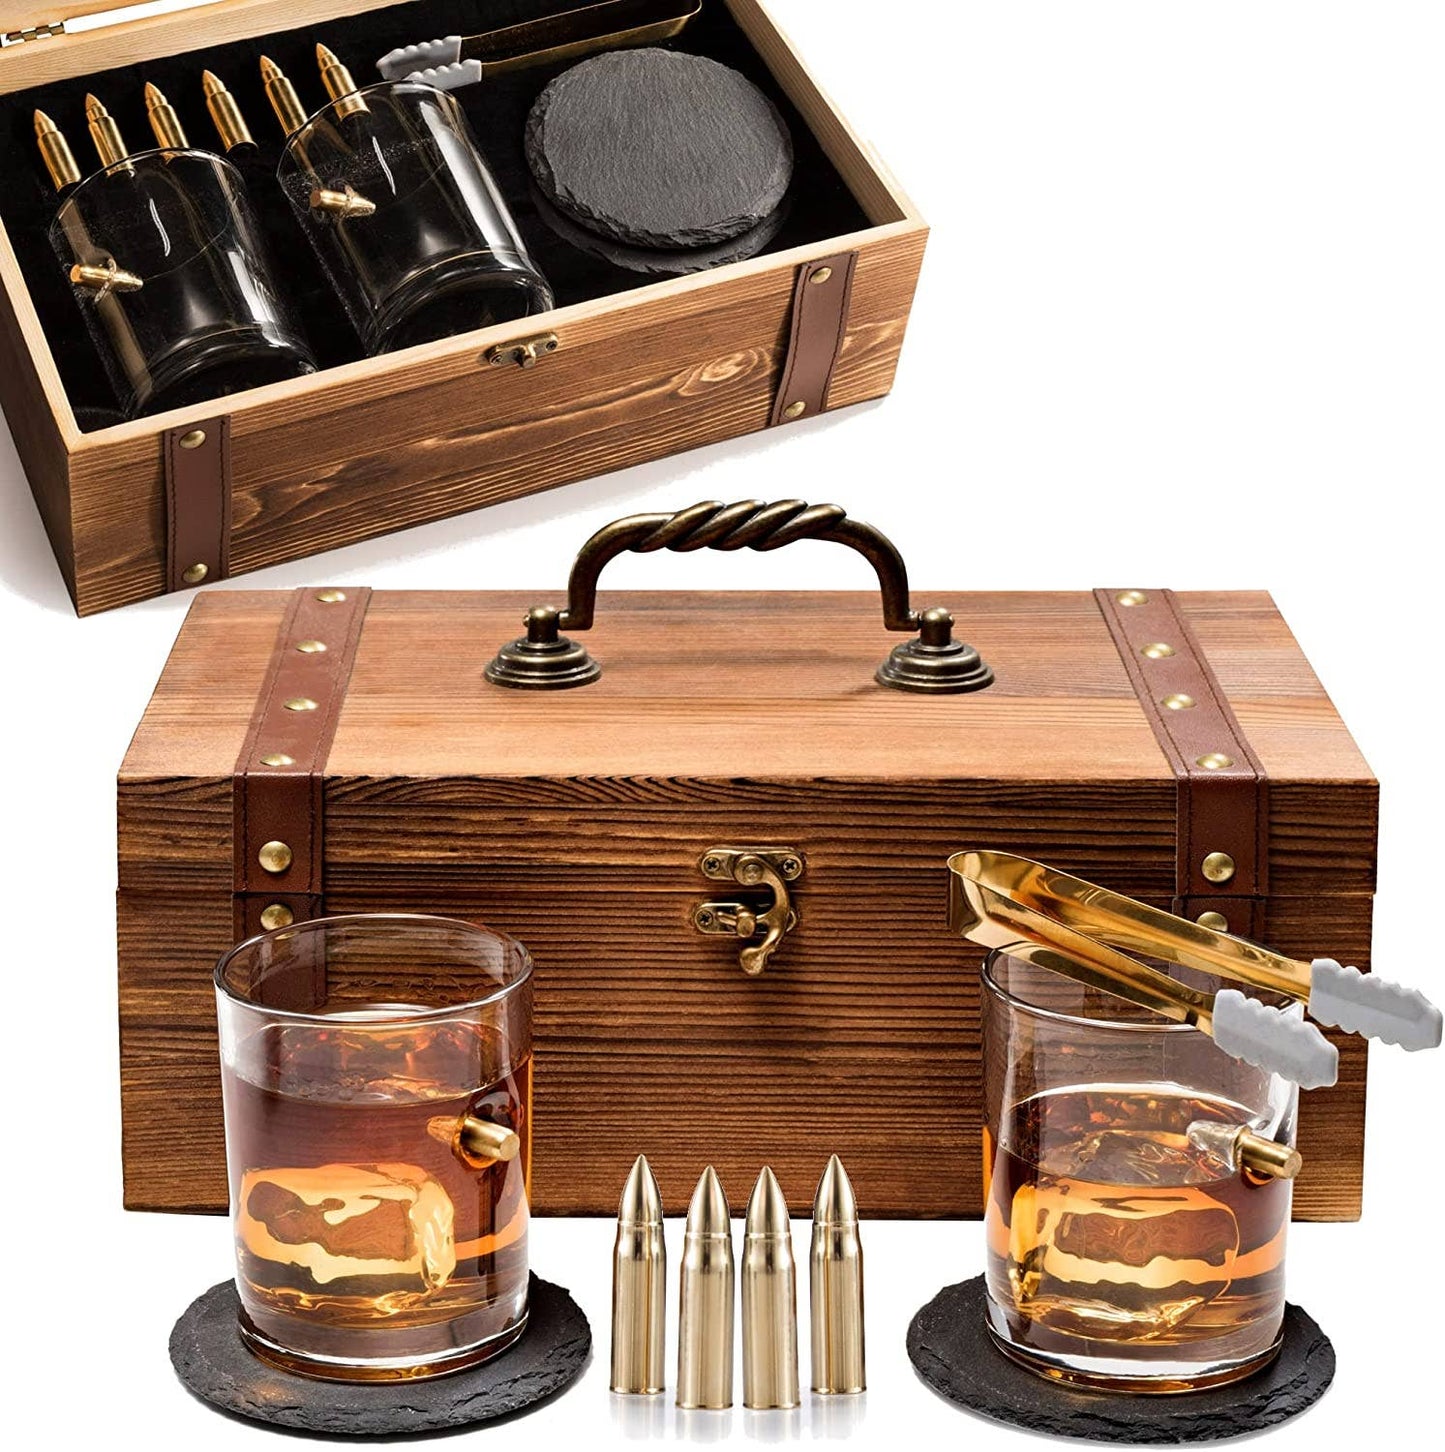 WhiskeyGlasses & Stones Unique 10 Piece Gift Set in Gift Box